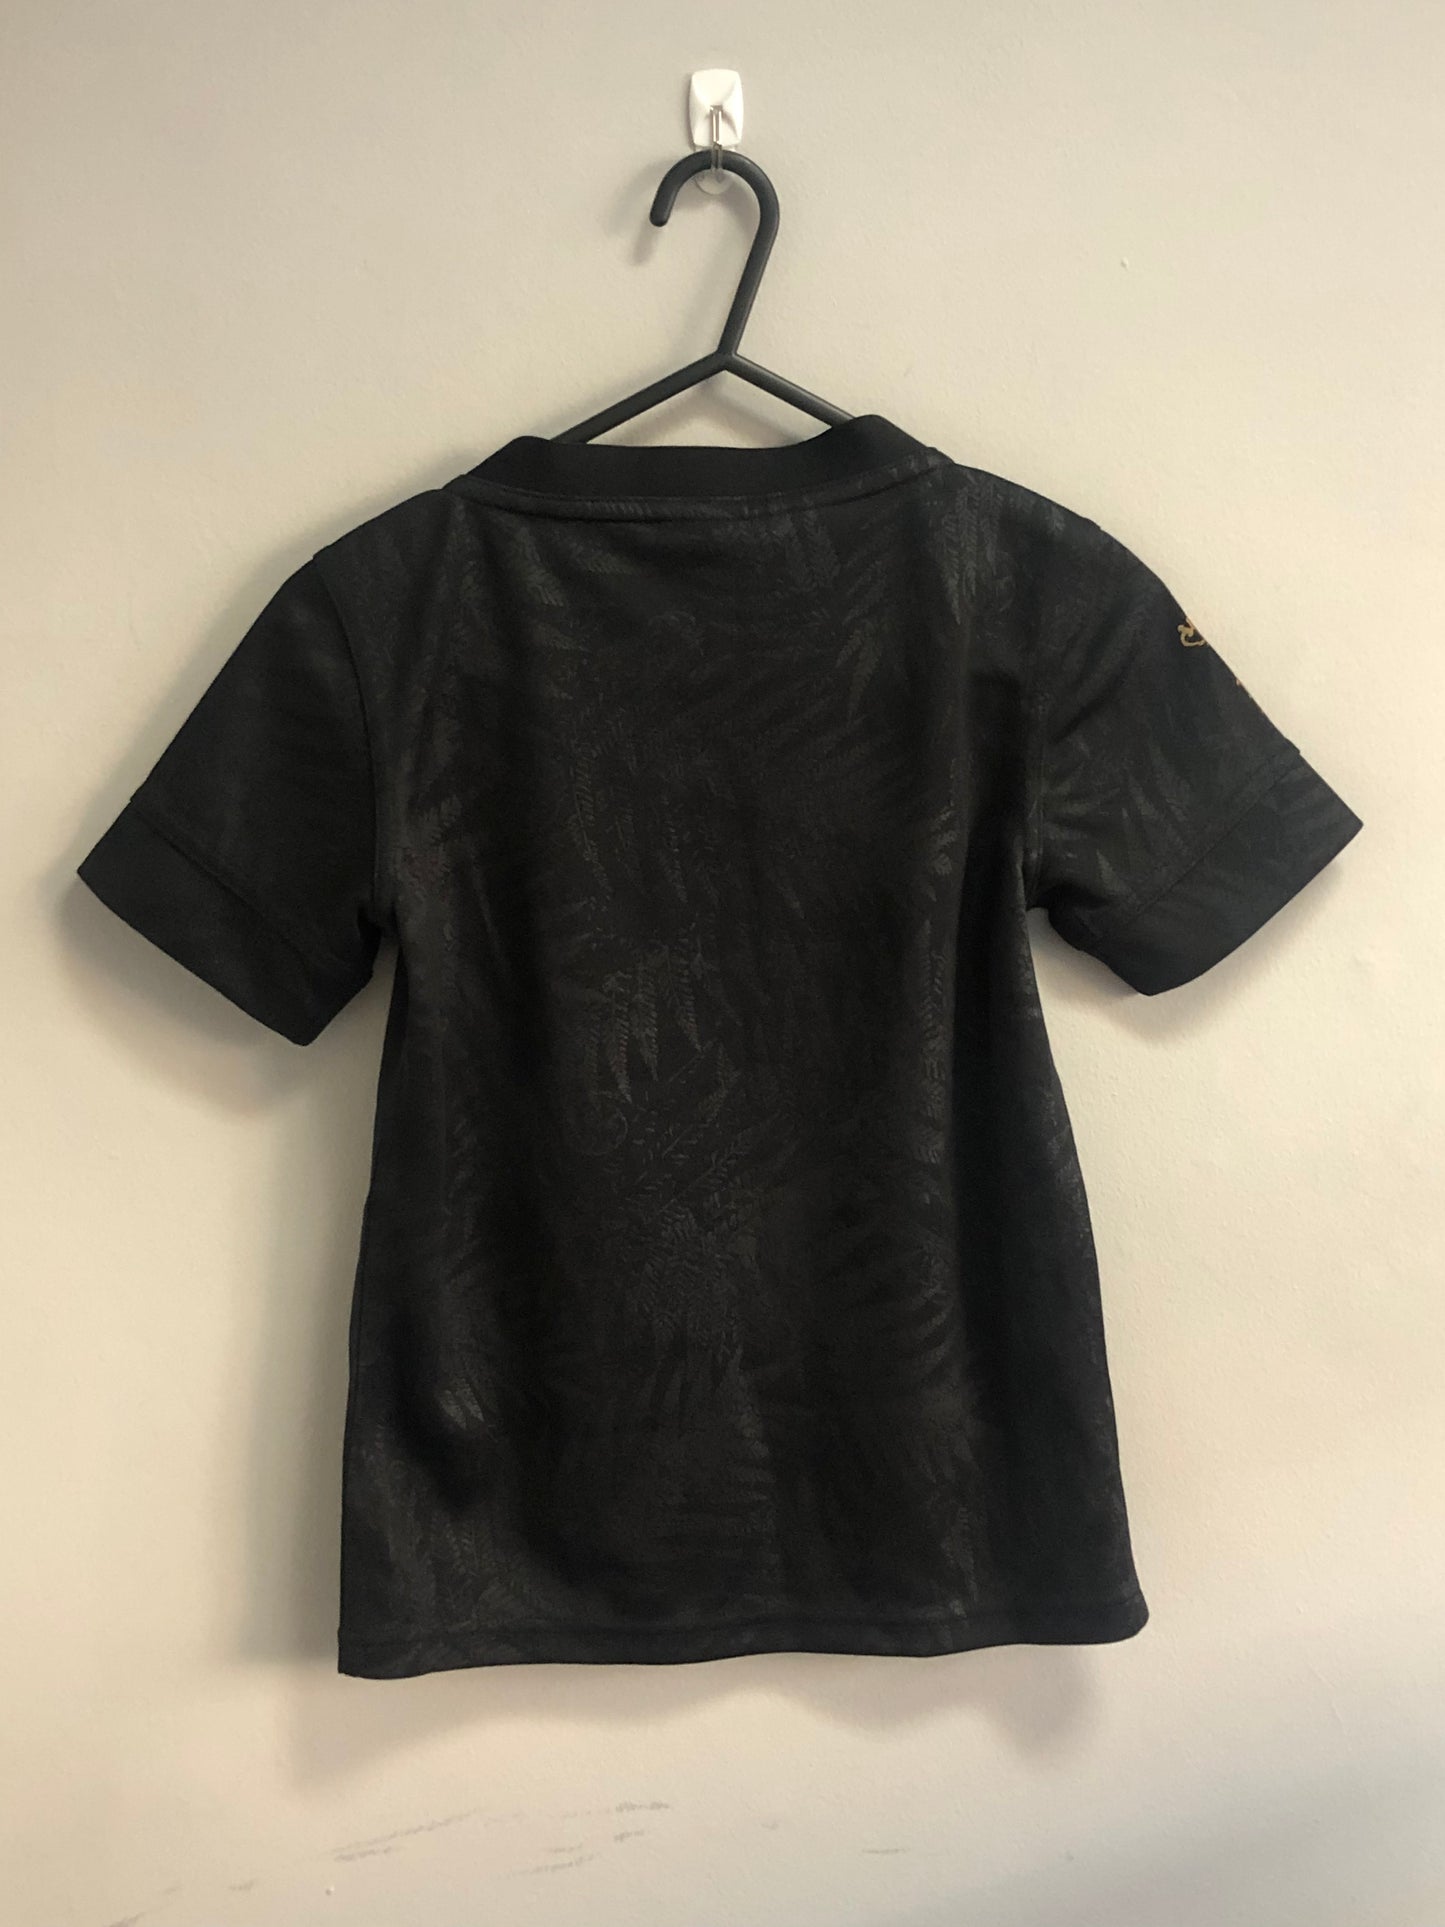 All Blacks Shirt - Medium Boys